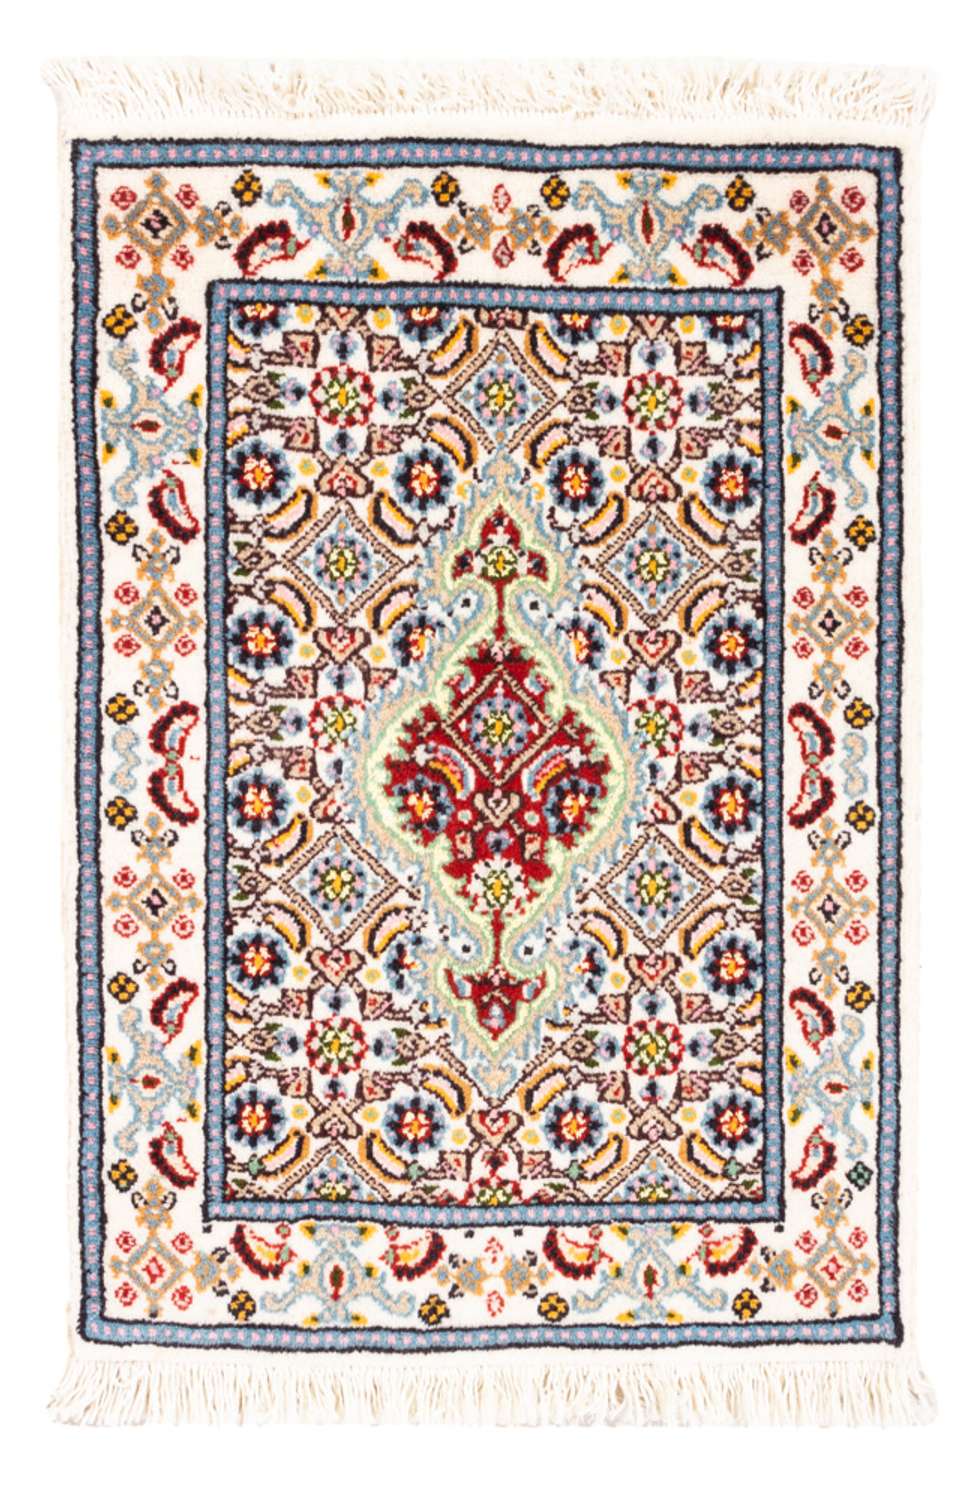 Alfombra persa - Clásica - Real - 60 x 40 cm - multicolor